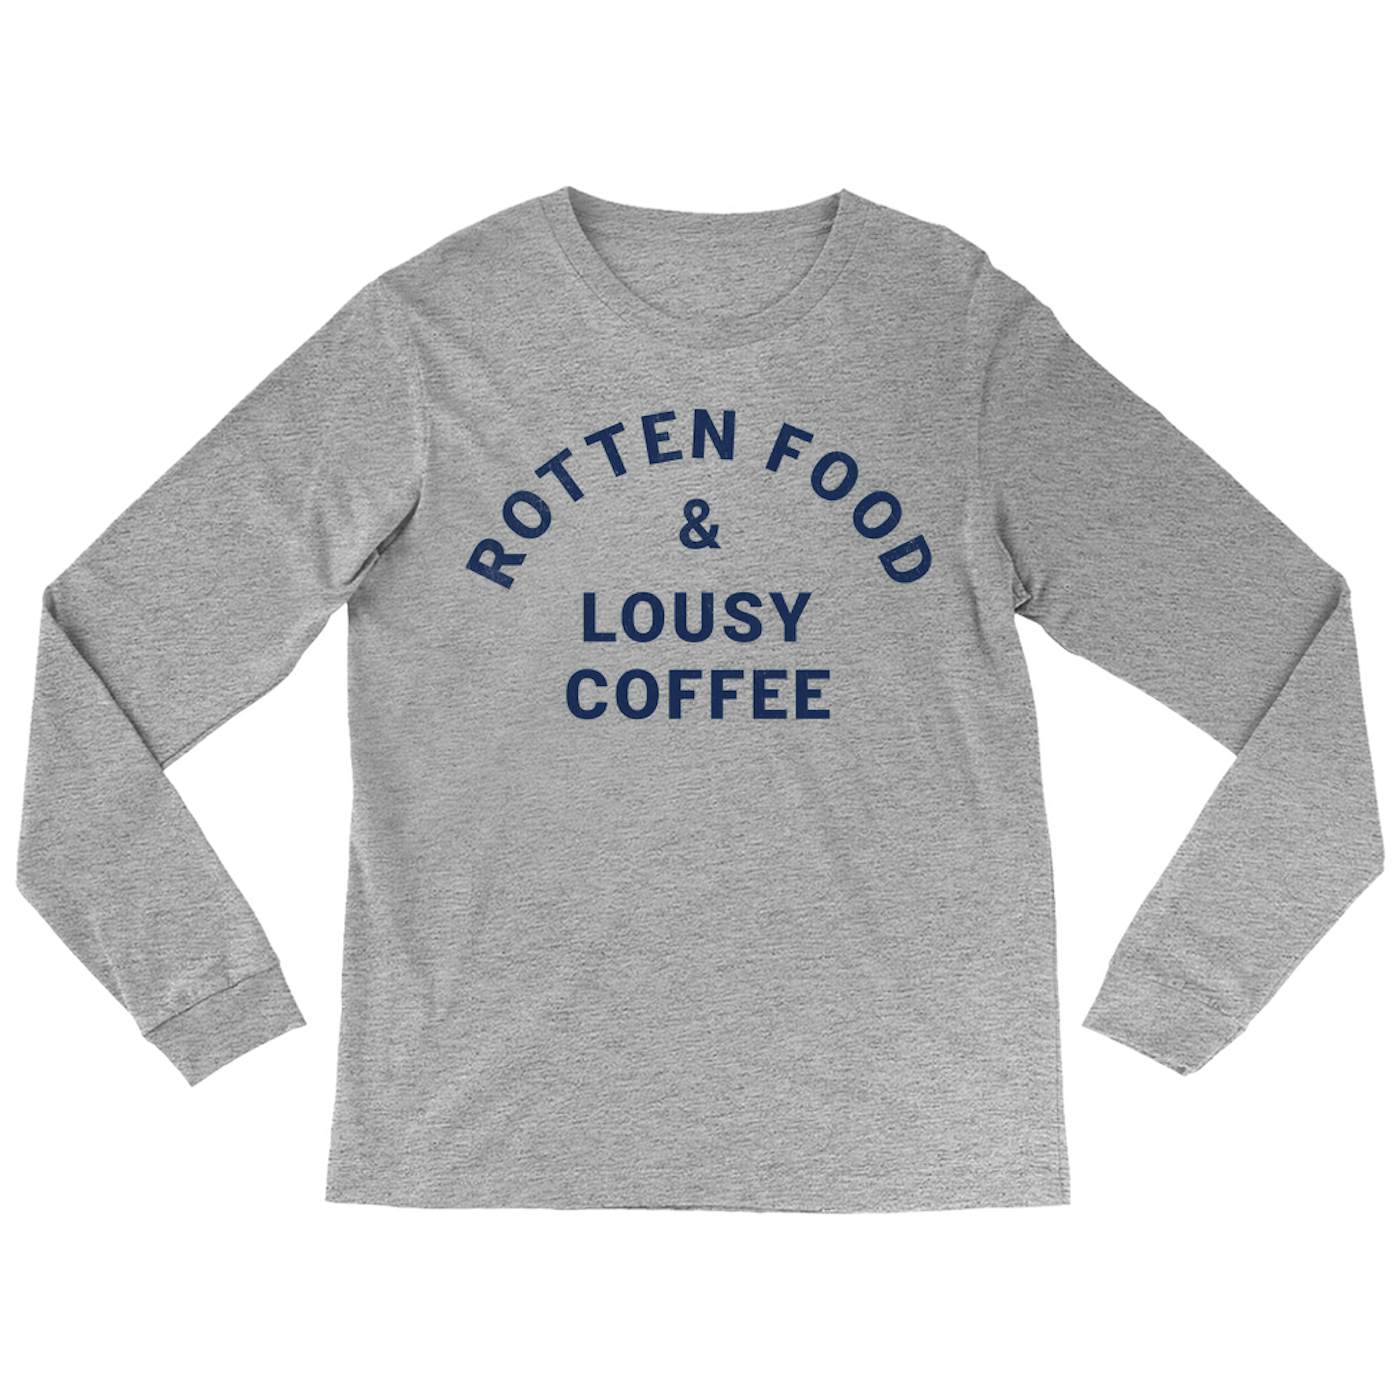 Joe Cocker Long Sleeve Shirt | Rotten Food & Lousy Coffee Tee worn by Joe Cocker Shirt